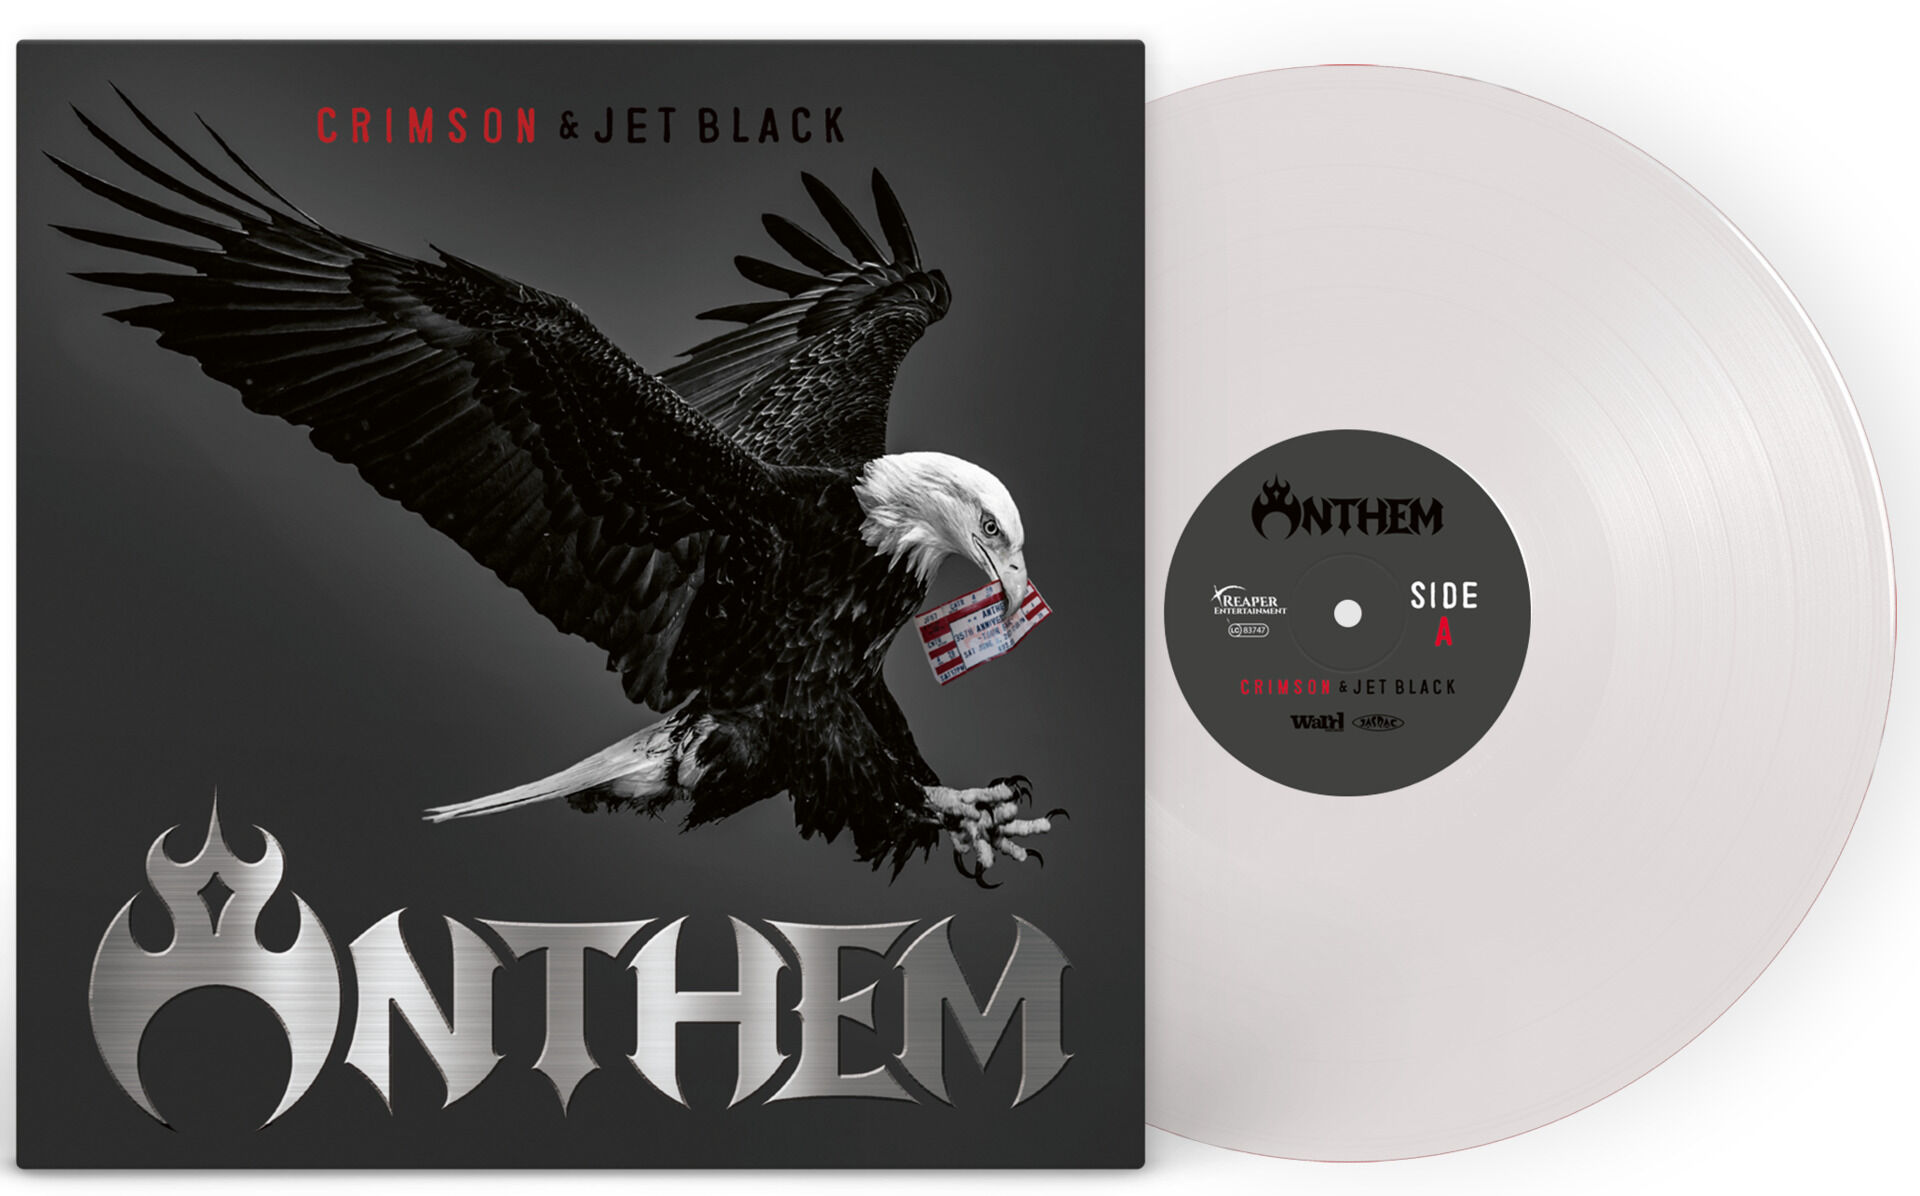 ANTHEM - Crimson & Jet Black [WHITE LP]